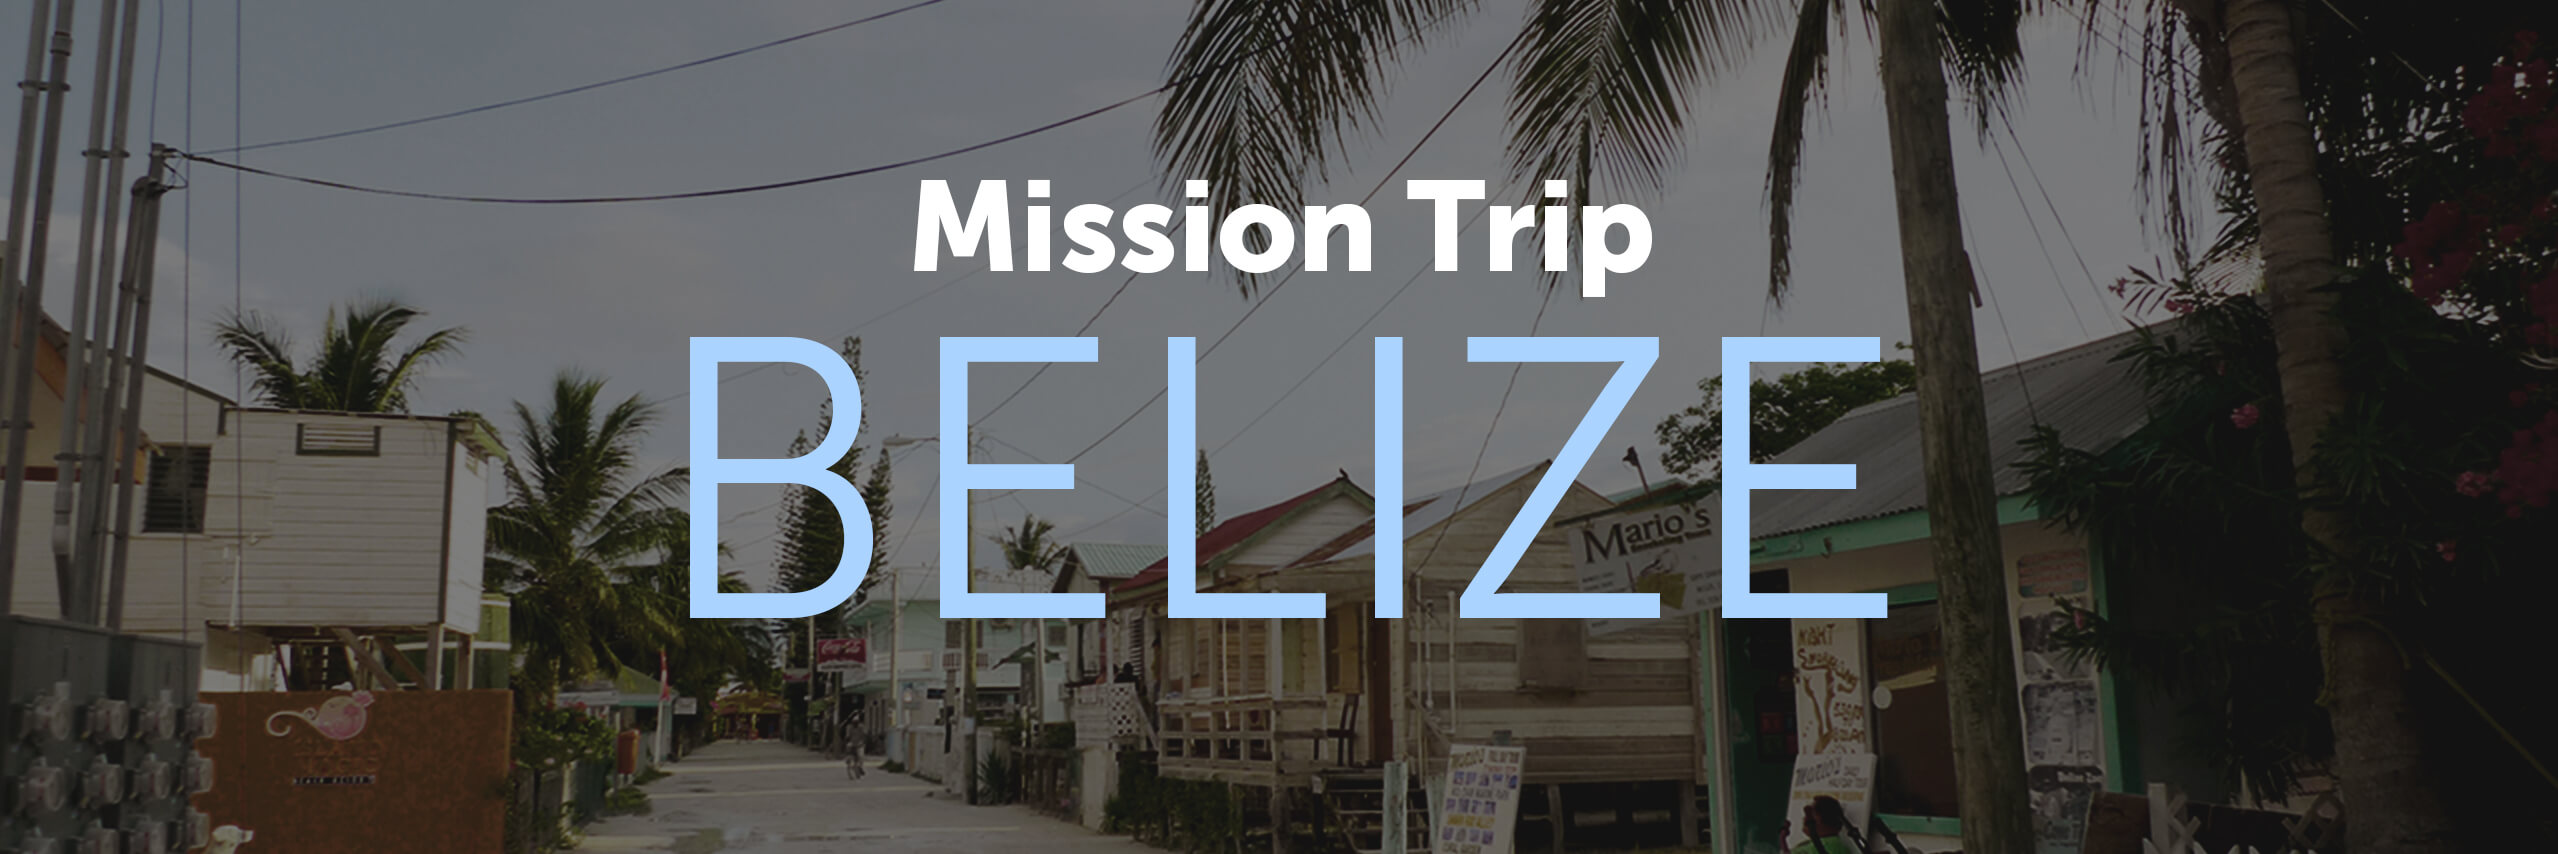 Belize Mission Trip